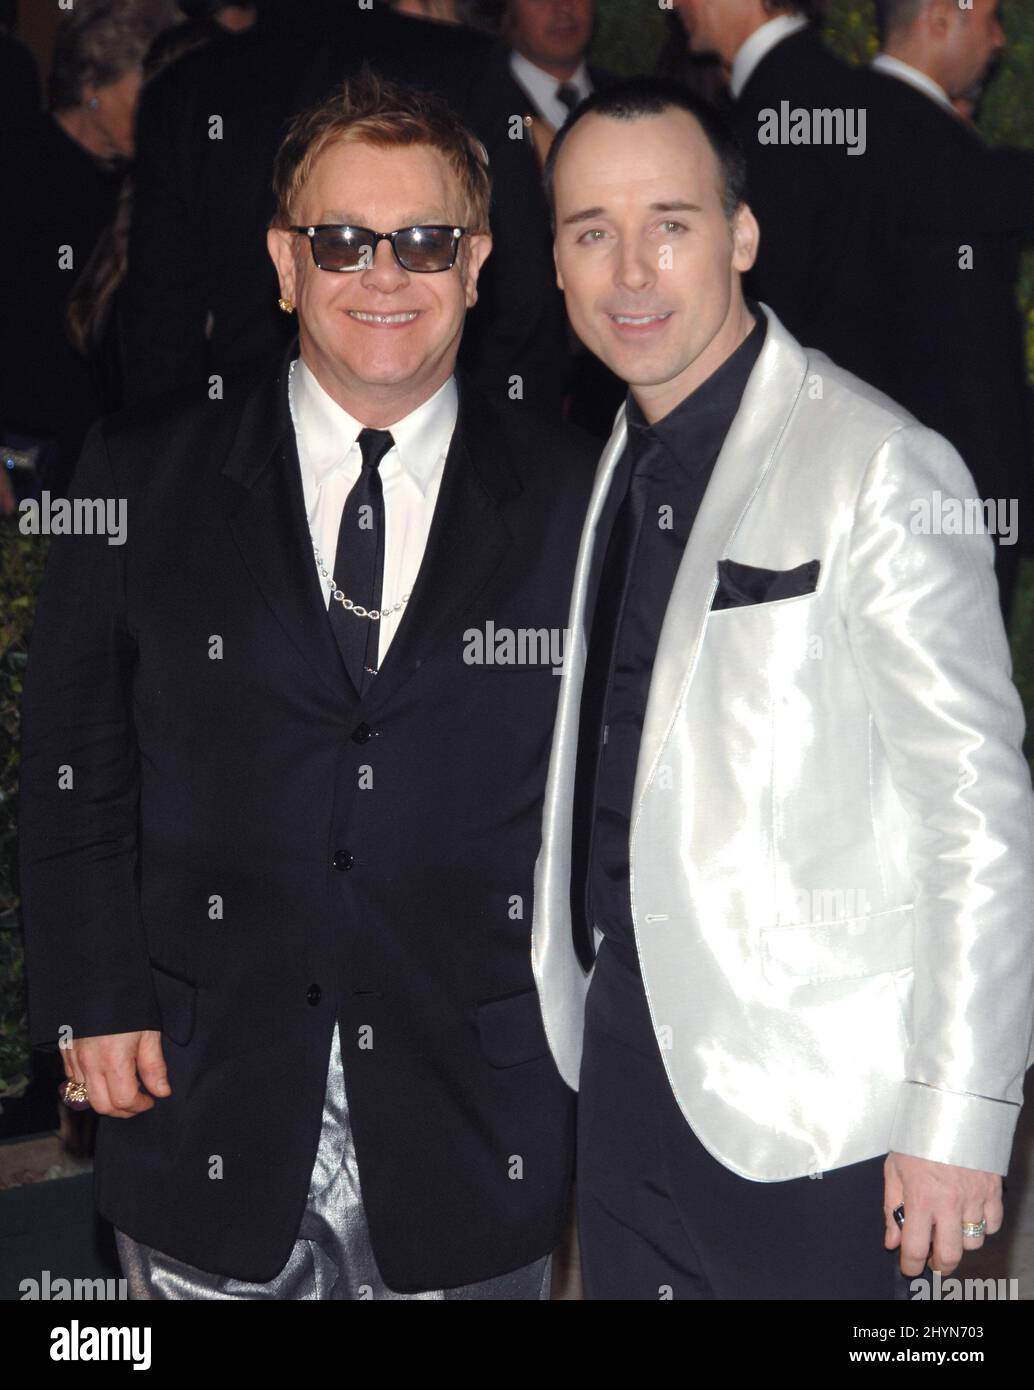 Elton John & David Furnish partecipa al Vanity Fair Oscar Party 2007 al Mortons Restaurant di Hollywood. Foto: UK Stampa Foto Stock